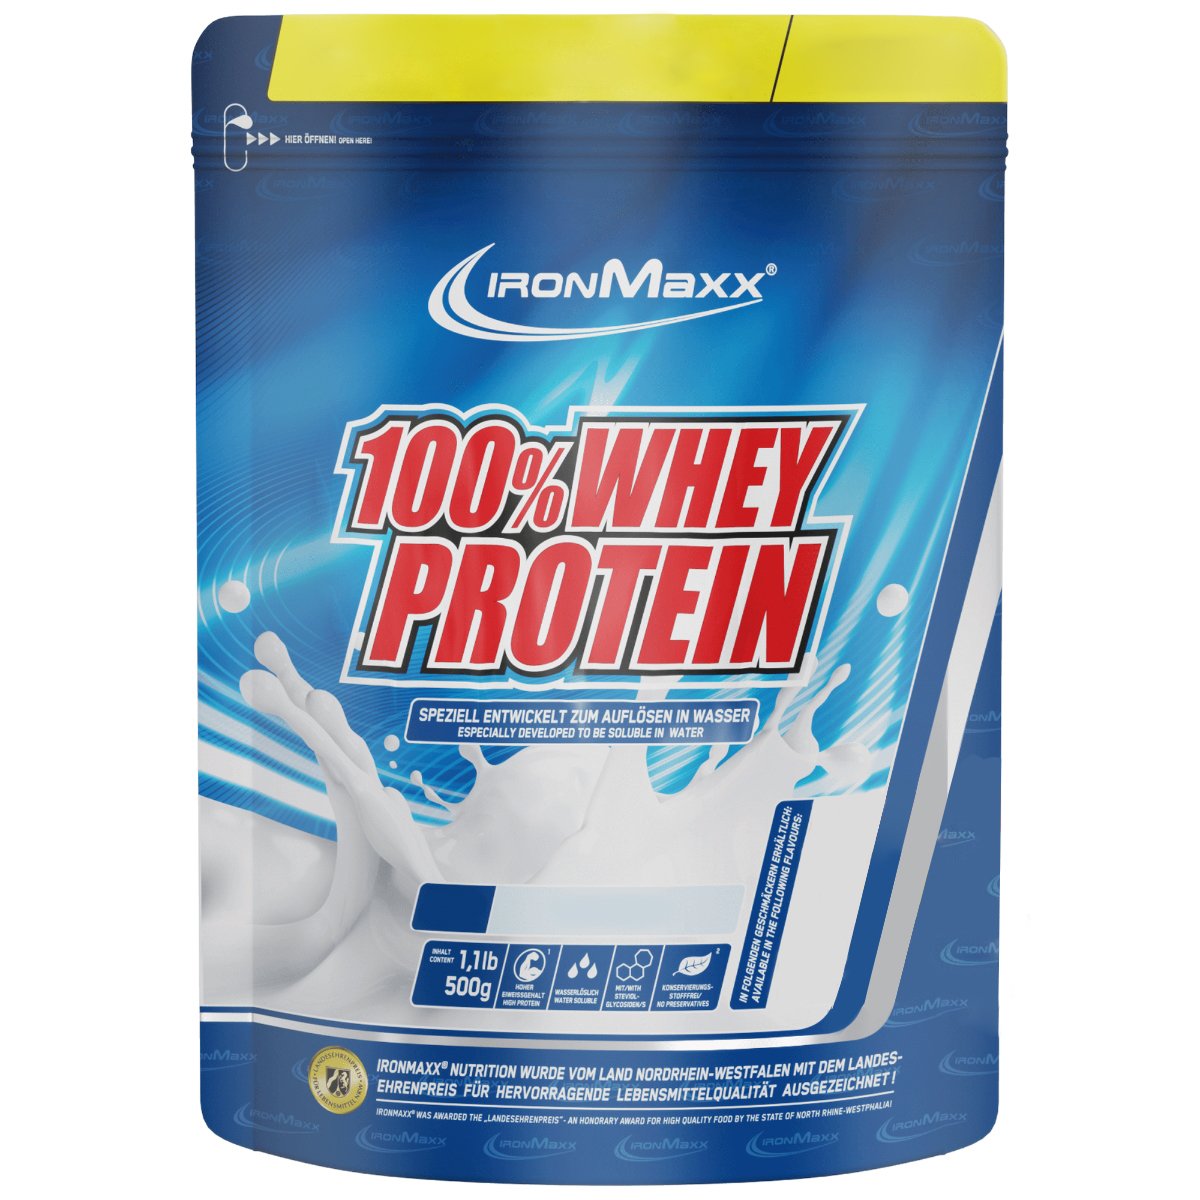 IronMaxx Протеин Ironmaxx 100% Whey Protein, 500 грамм Белый шоколад-кокос, , 500 г